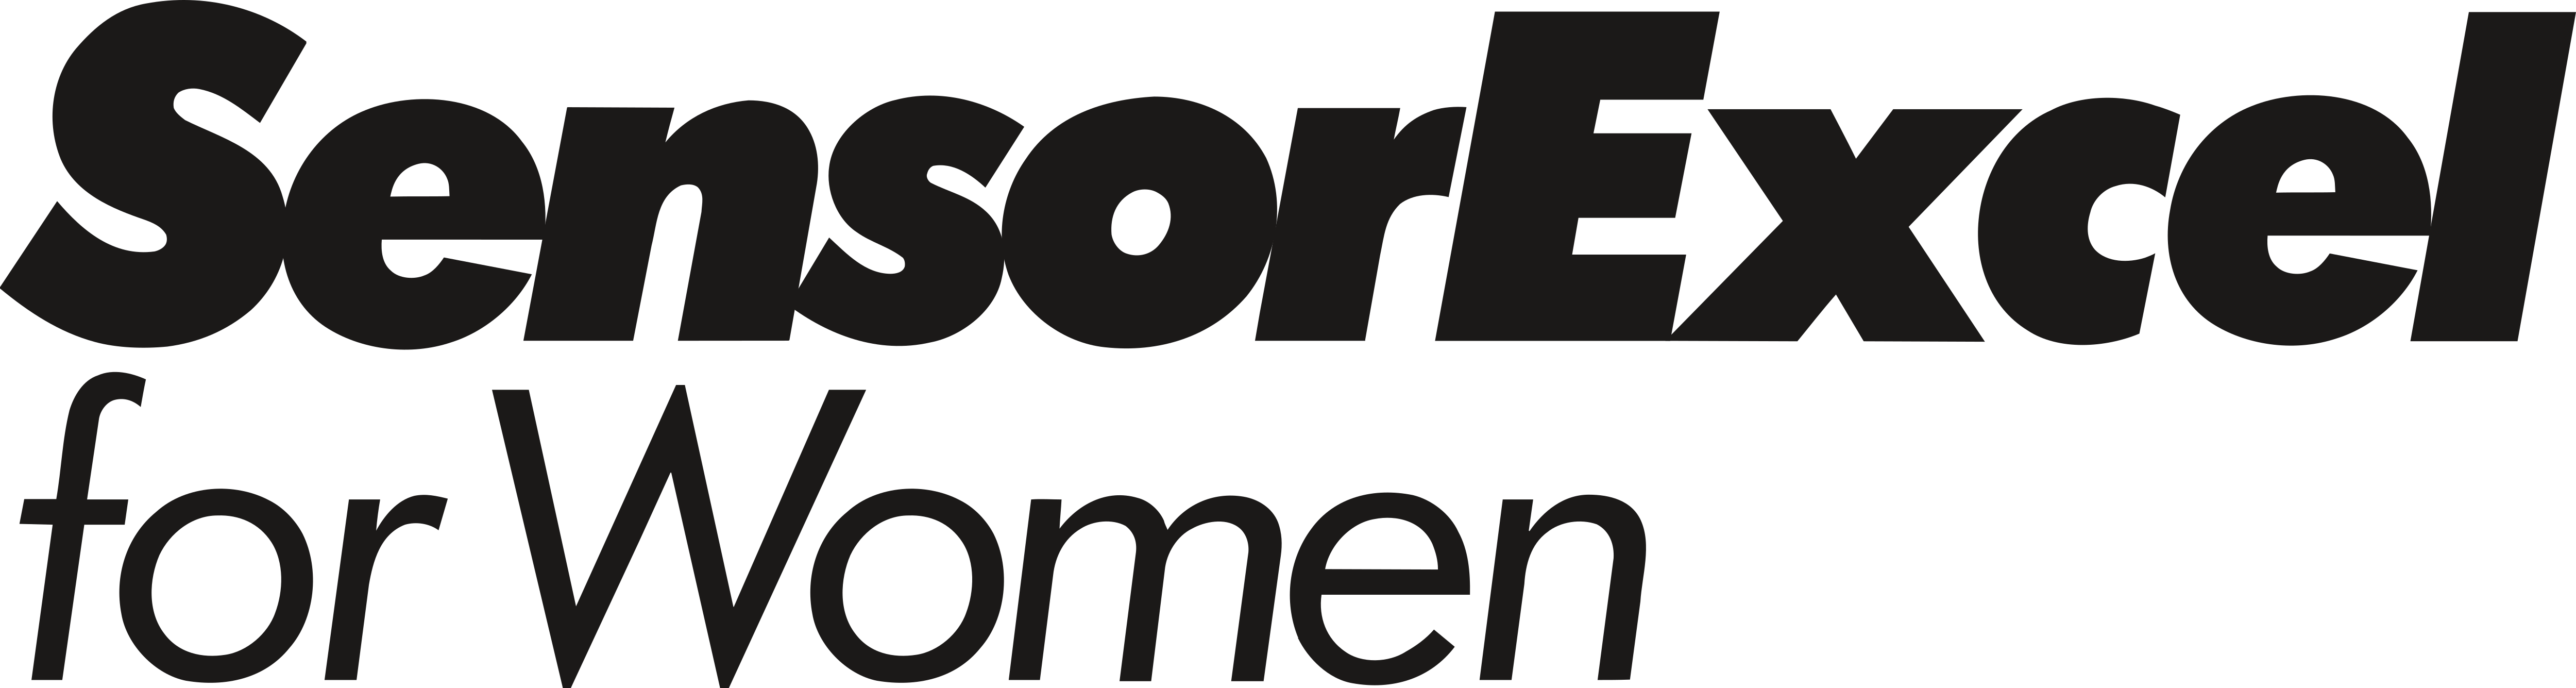 Gillette Sensorexcel For Women – Logos Download - Gillette, Transparent background PNG HD thumbnail